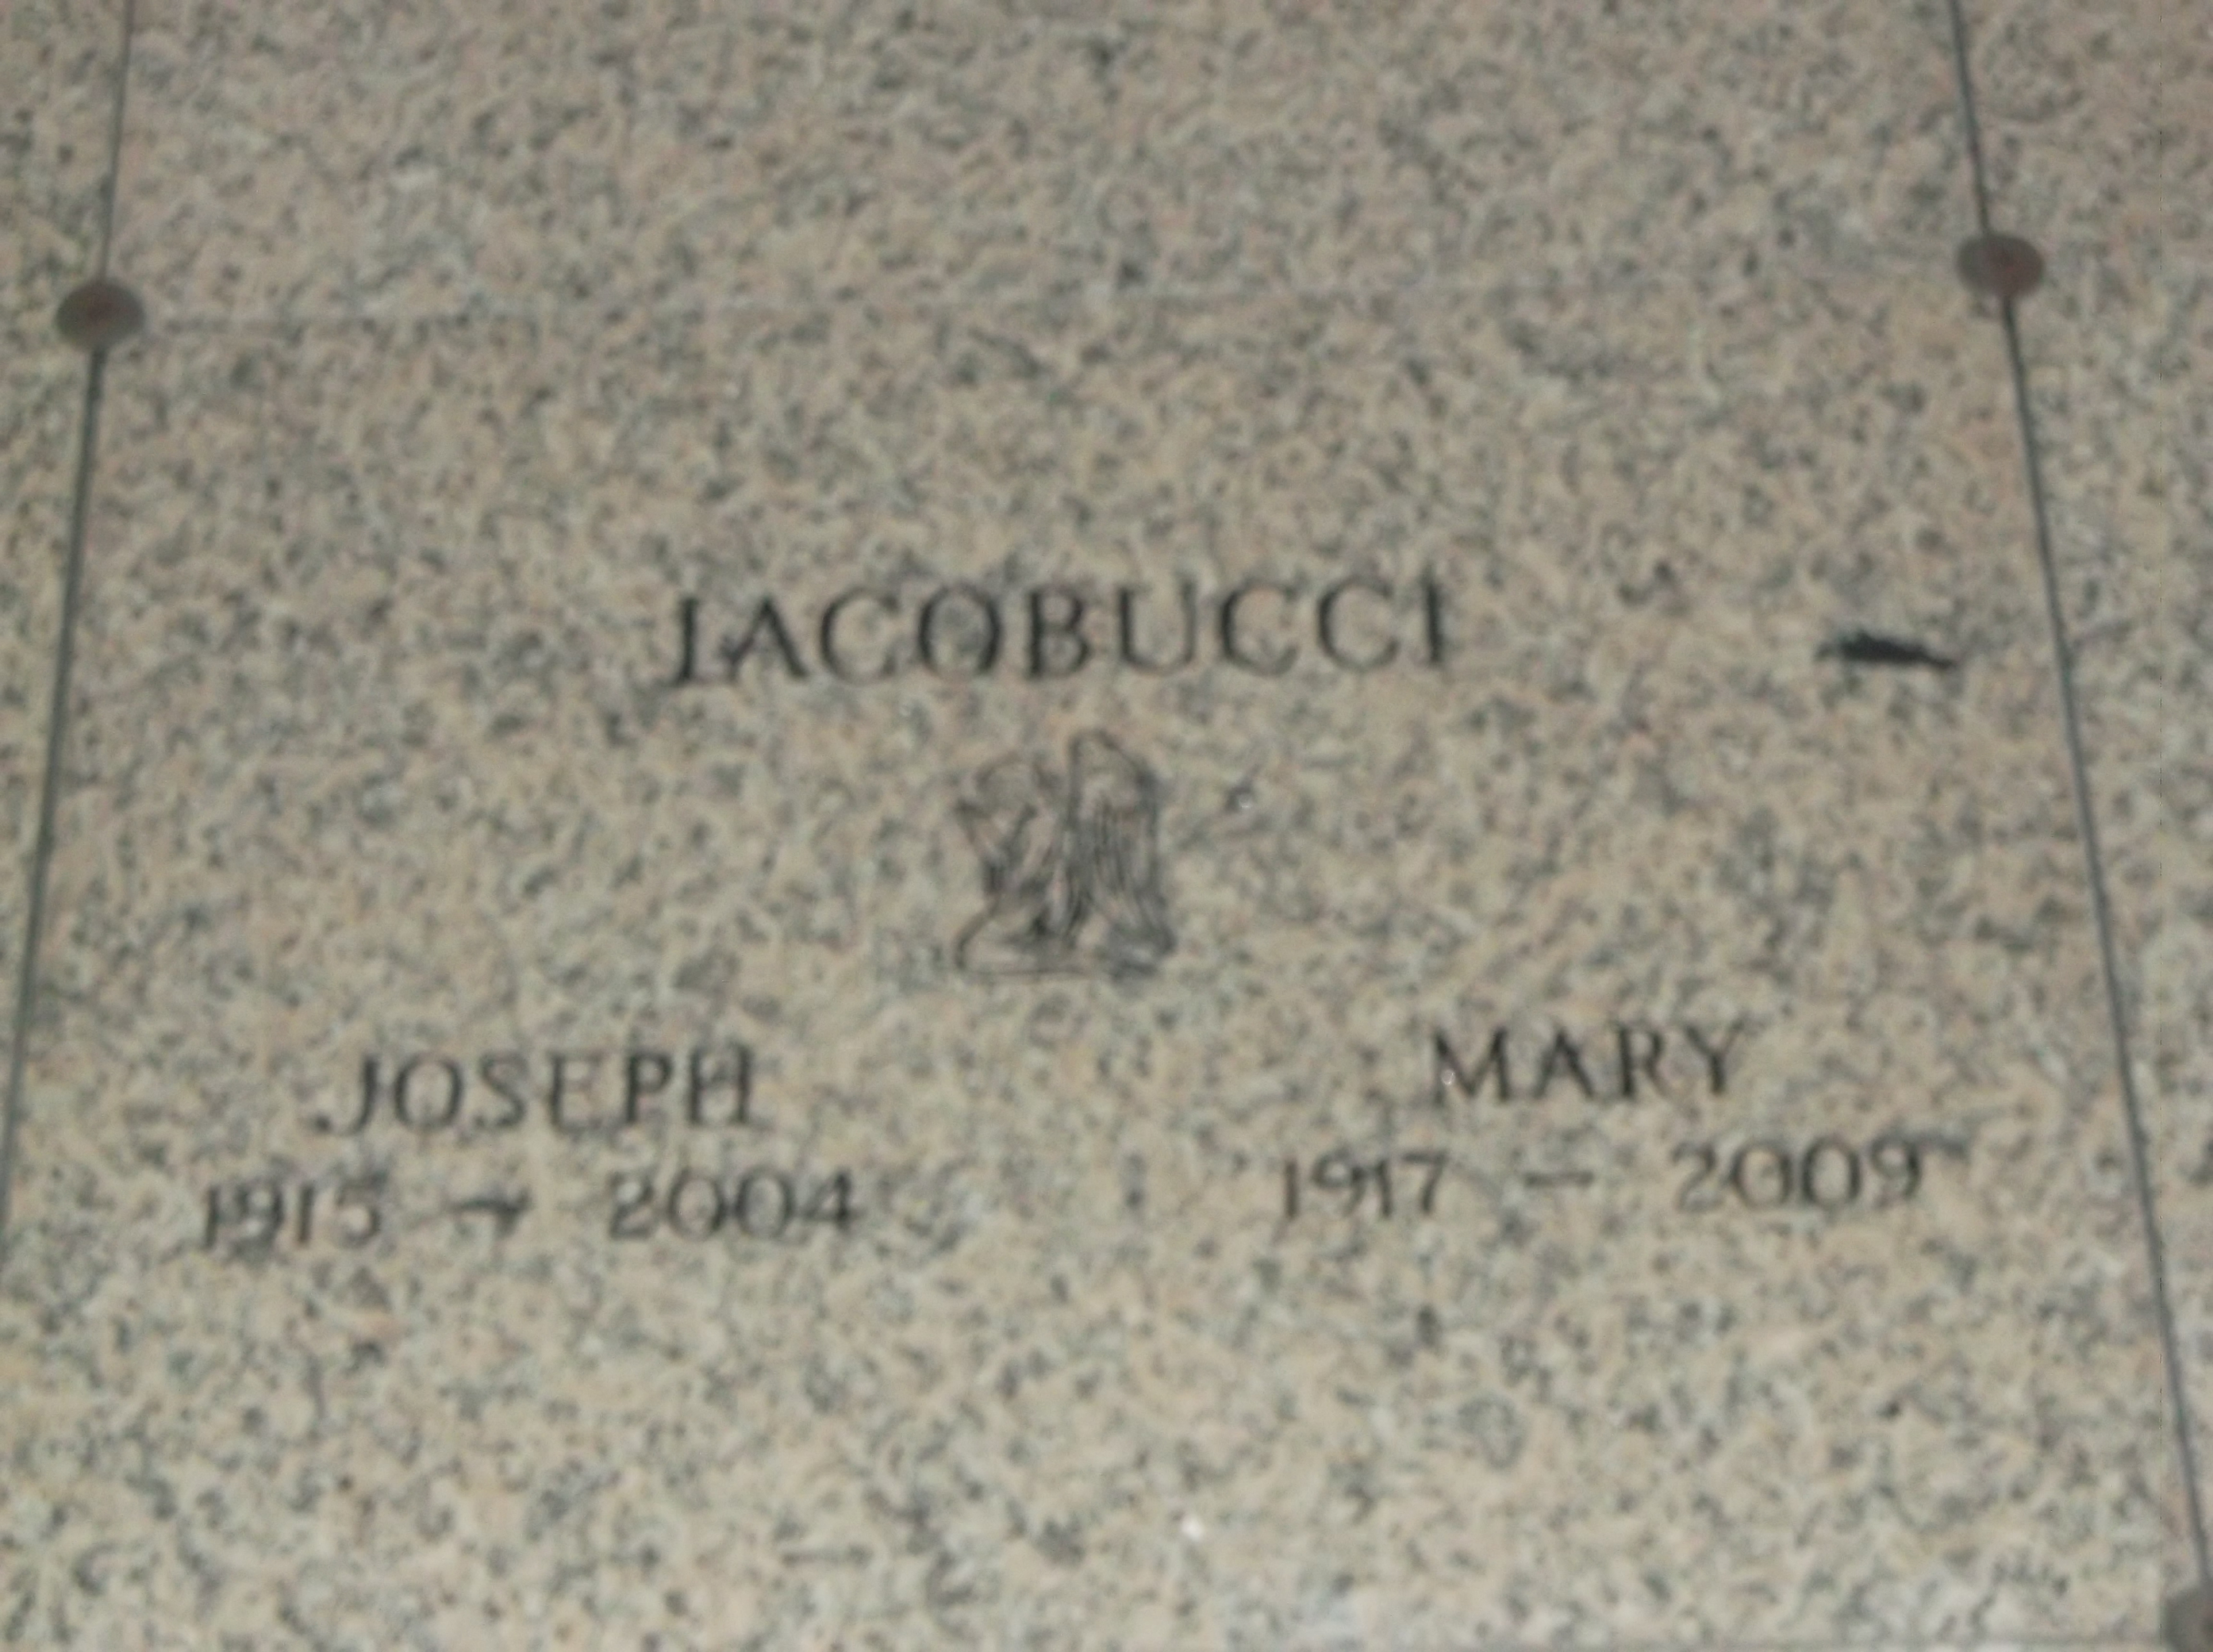 Joseph Jacobucci